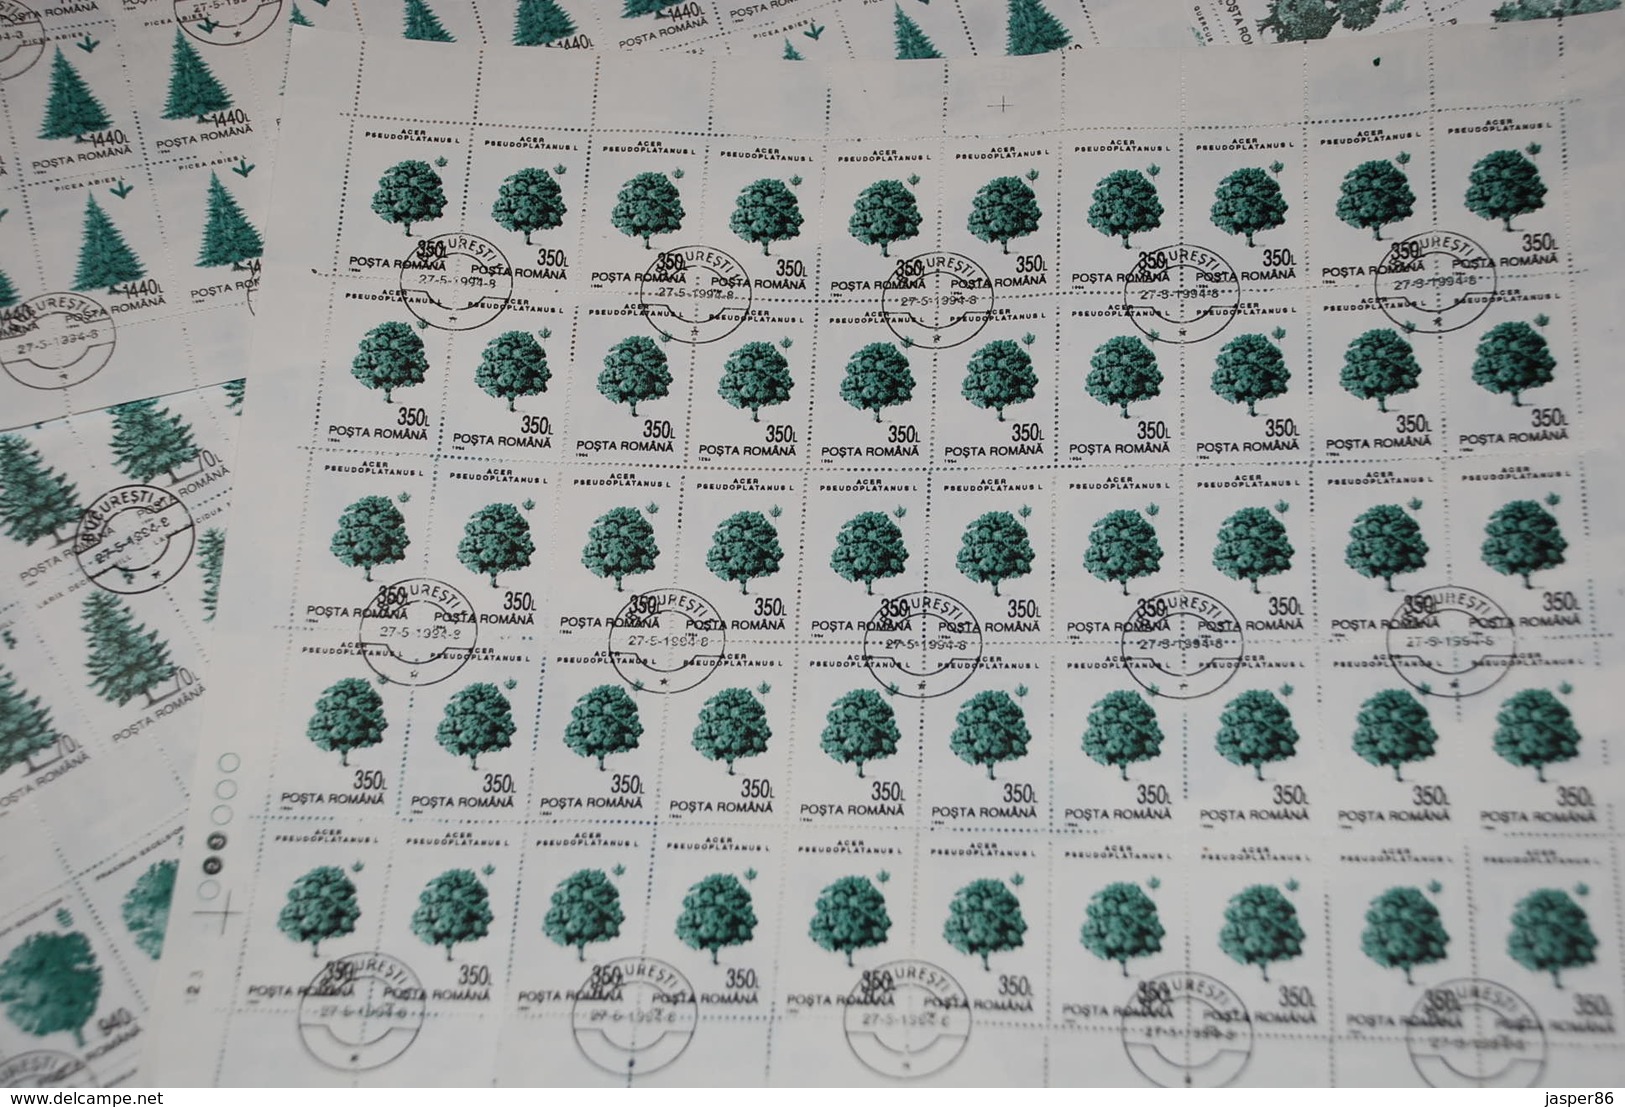 ROMANIA 500 TREES Sc 3913-3922, 50 x complete SETS Wholesale CV$110.00